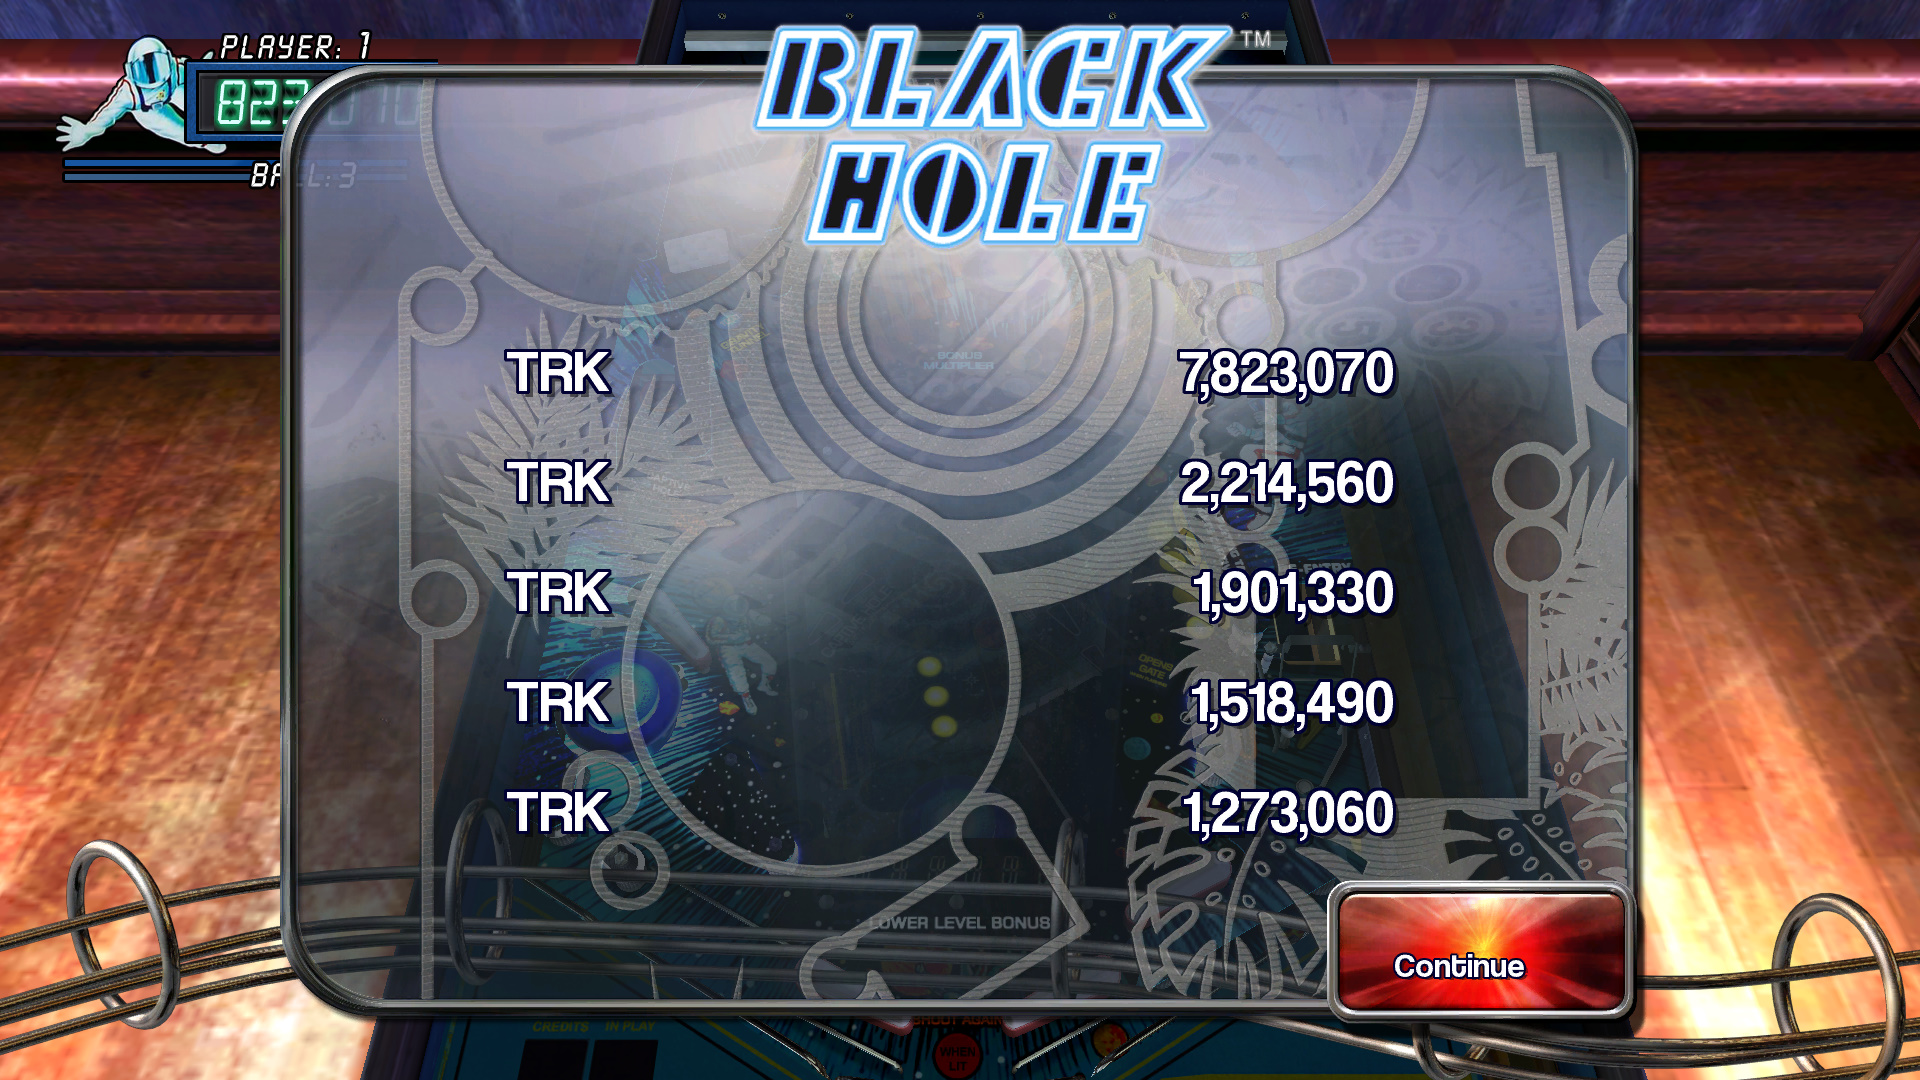 TheTrickster: Pinball Arcade: Black Hole (PC) 7,823,070 points on 2015-09-12 03:47:21